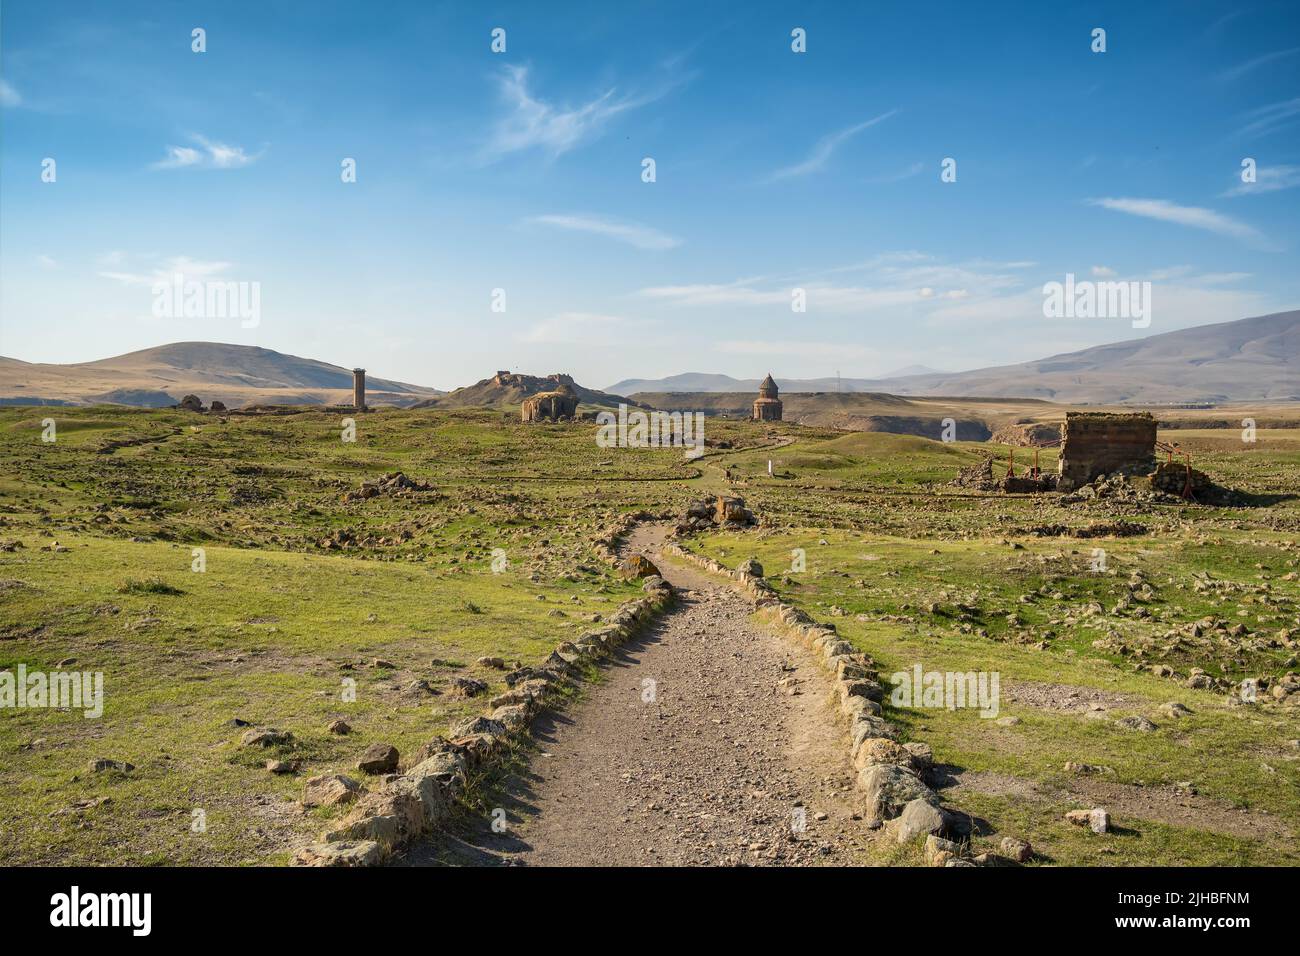 Big panorama of the Ani historical site in Eastern Anatolia, Turkey Stock Photo